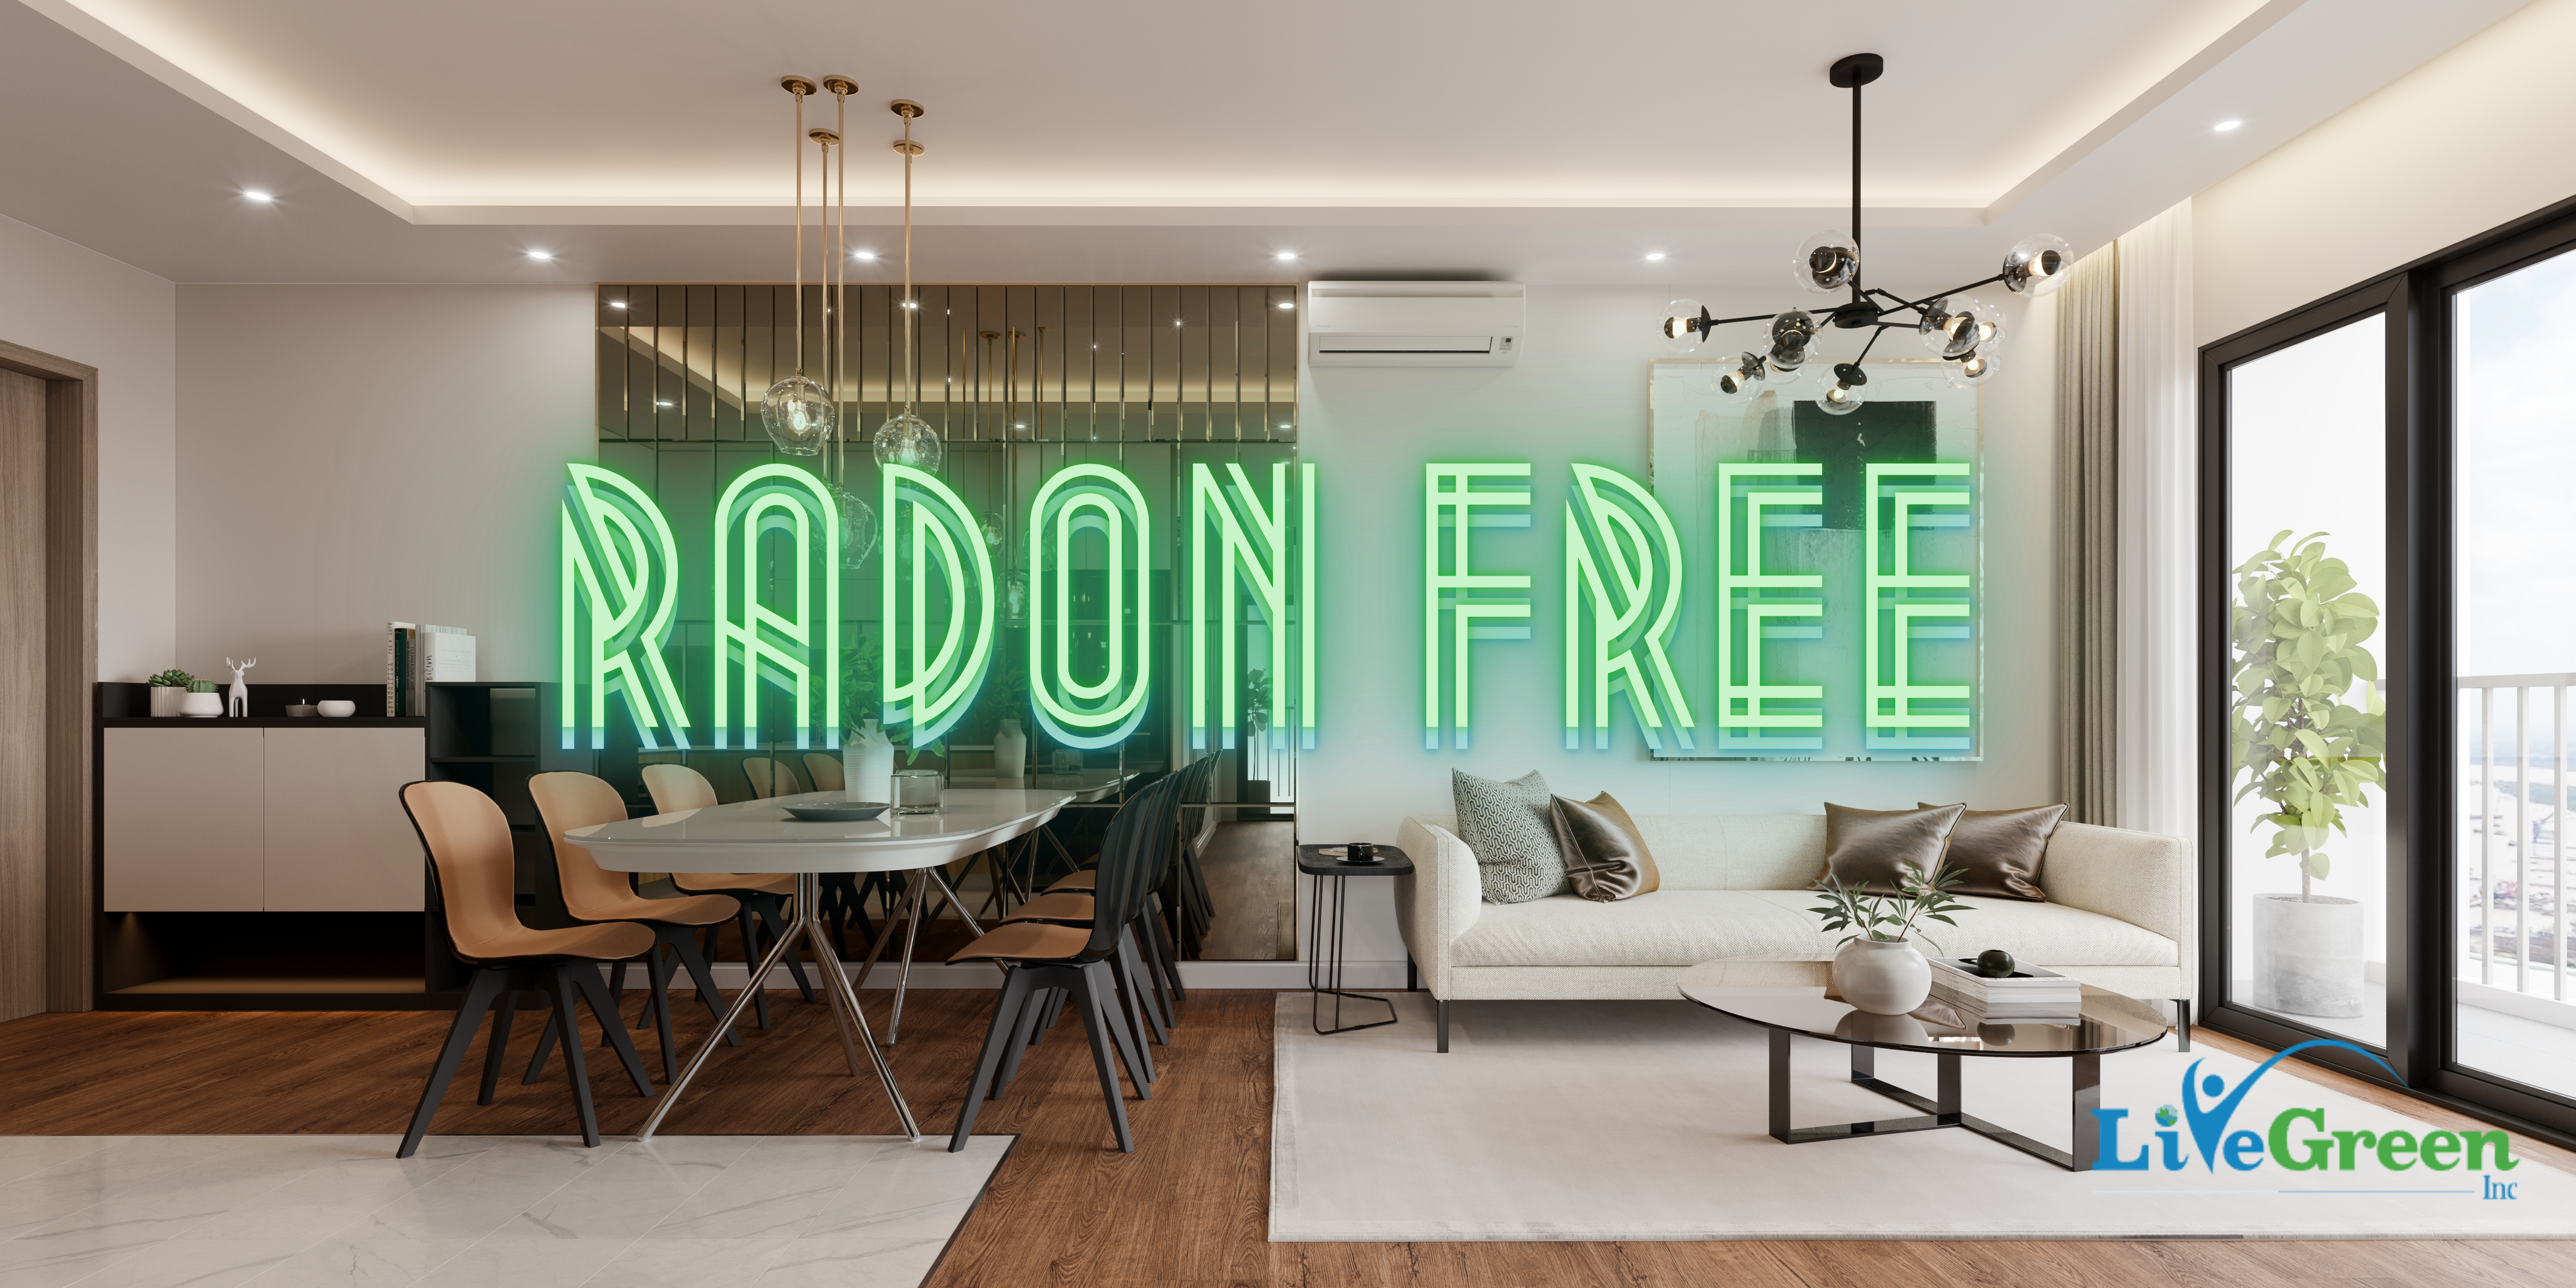 radon free